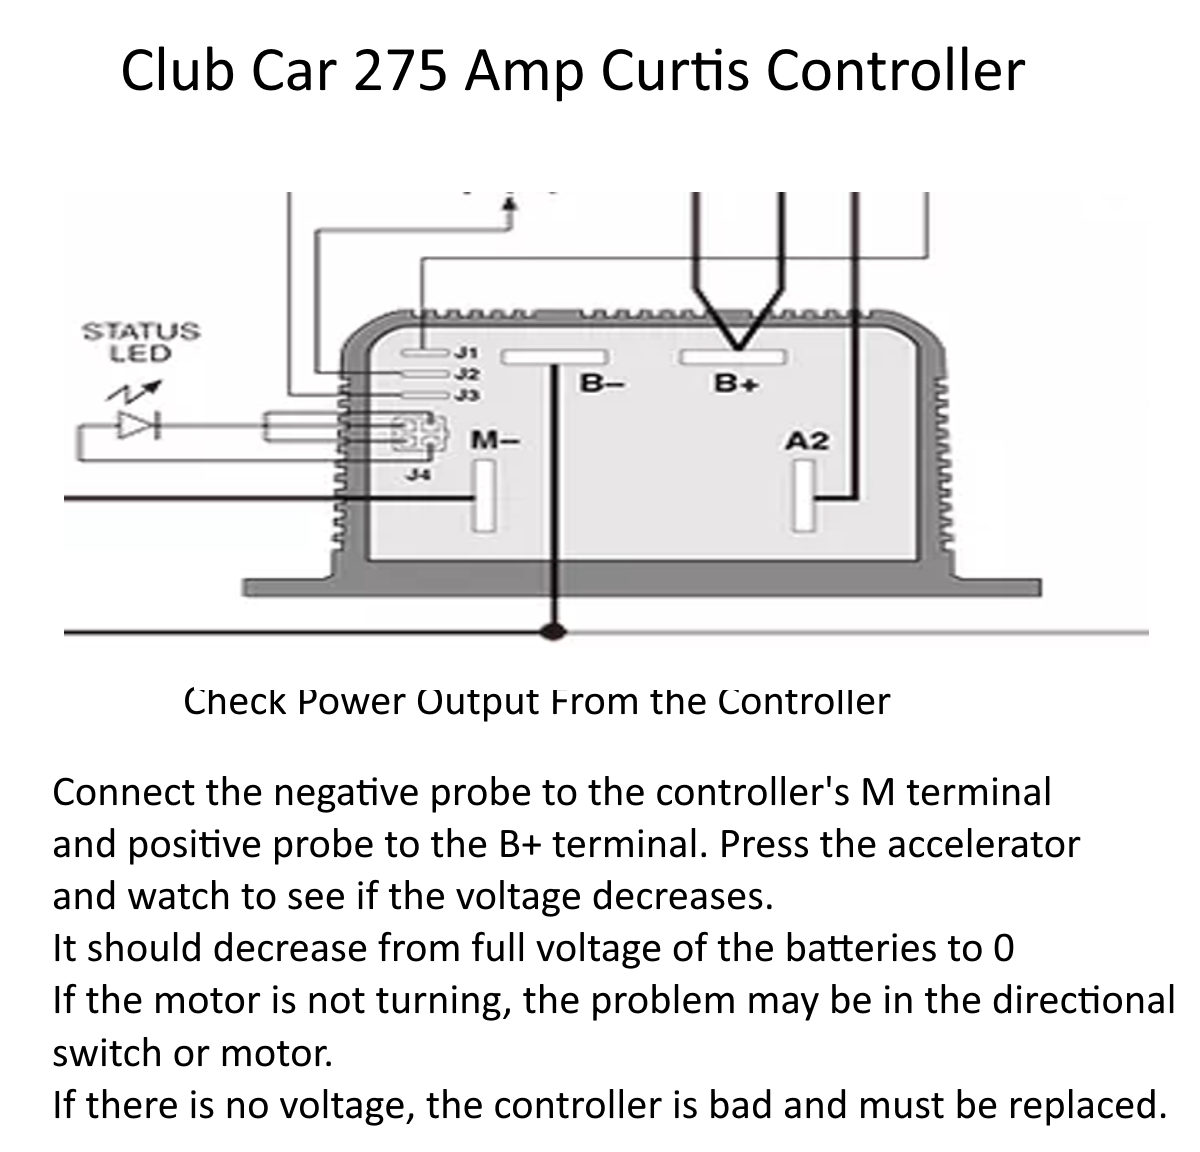 Club Car 275 Amp Curtis.png